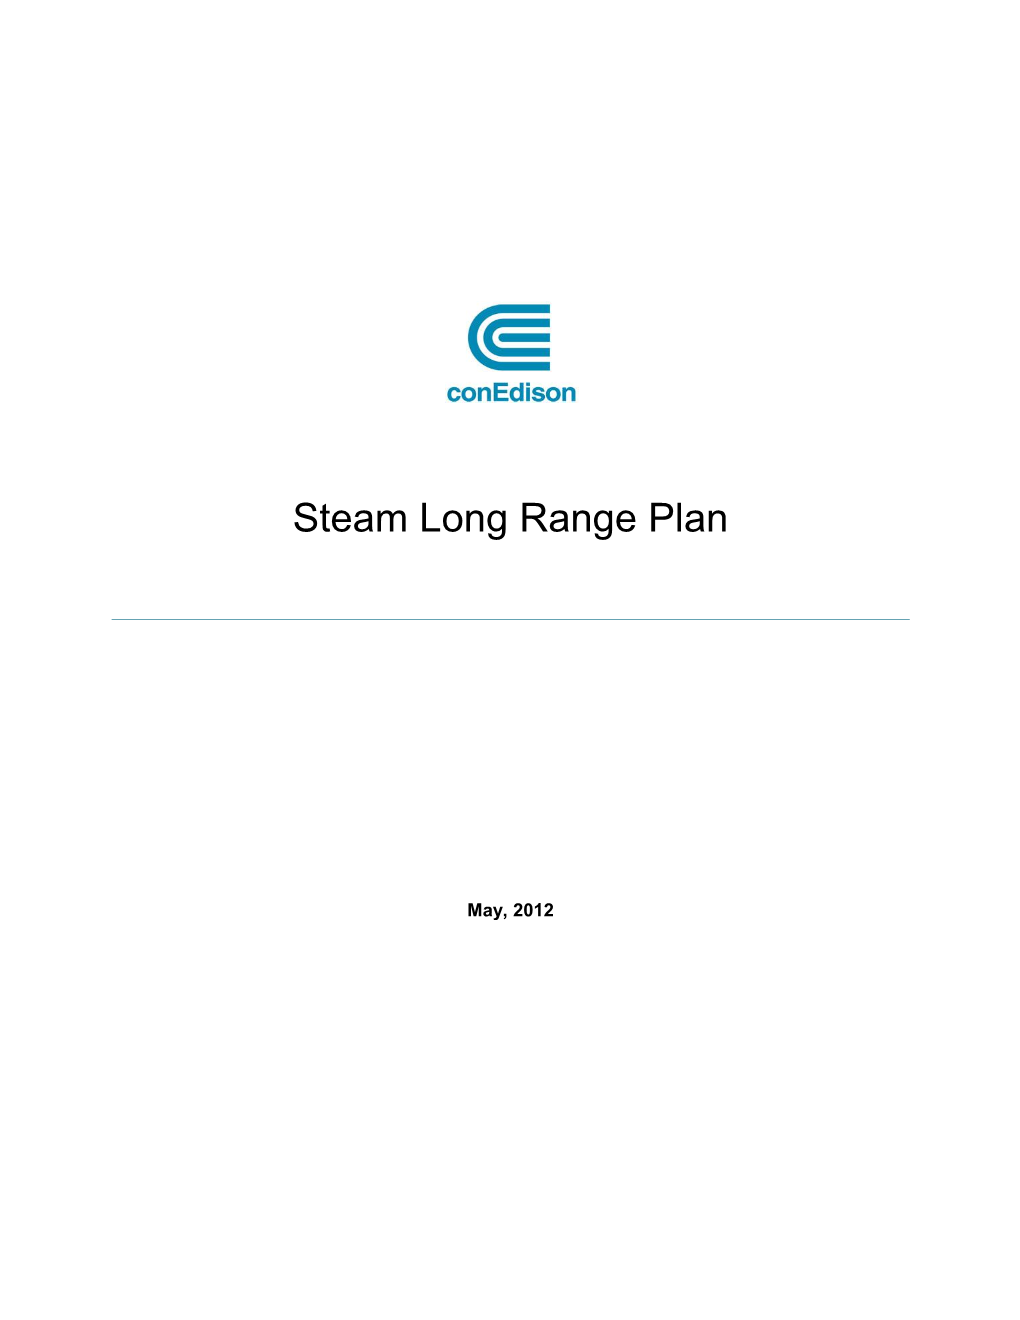 Steam Long Range Plan 2010-2030